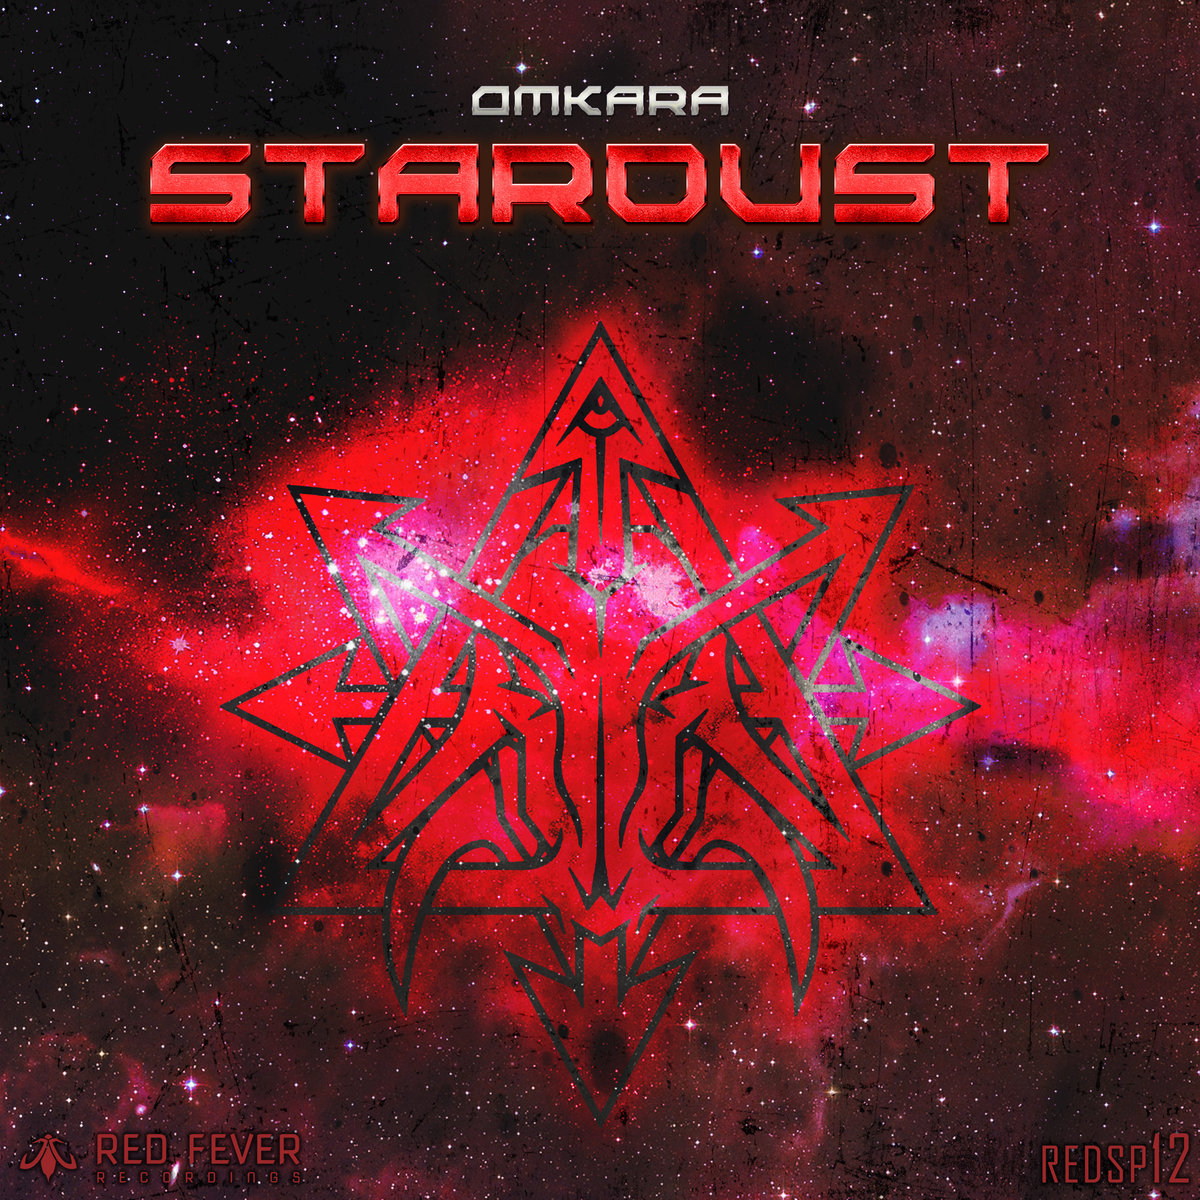 Omkara - Stardust